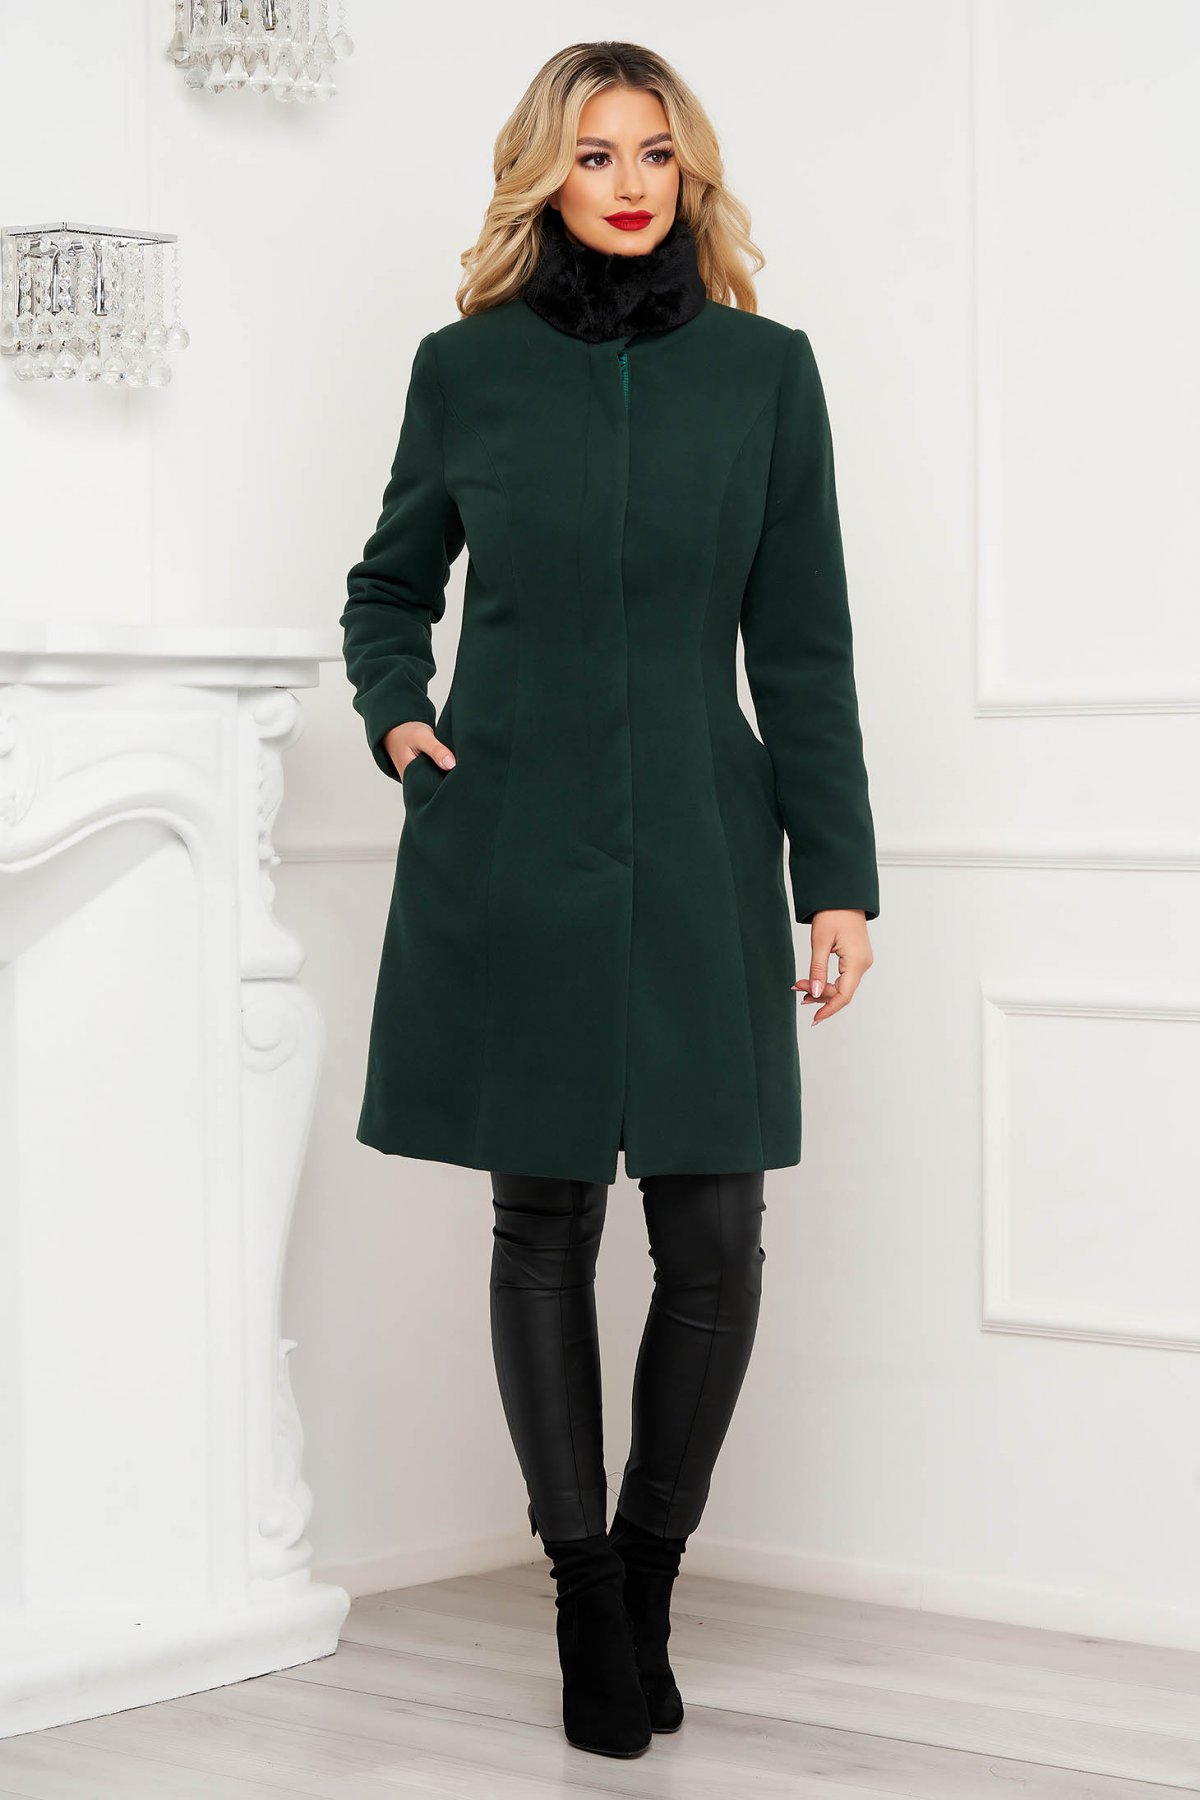 Palton Artista verde cambrat elegant cu guler din blana detasabila Artista imagine 2022 13clothing.ro